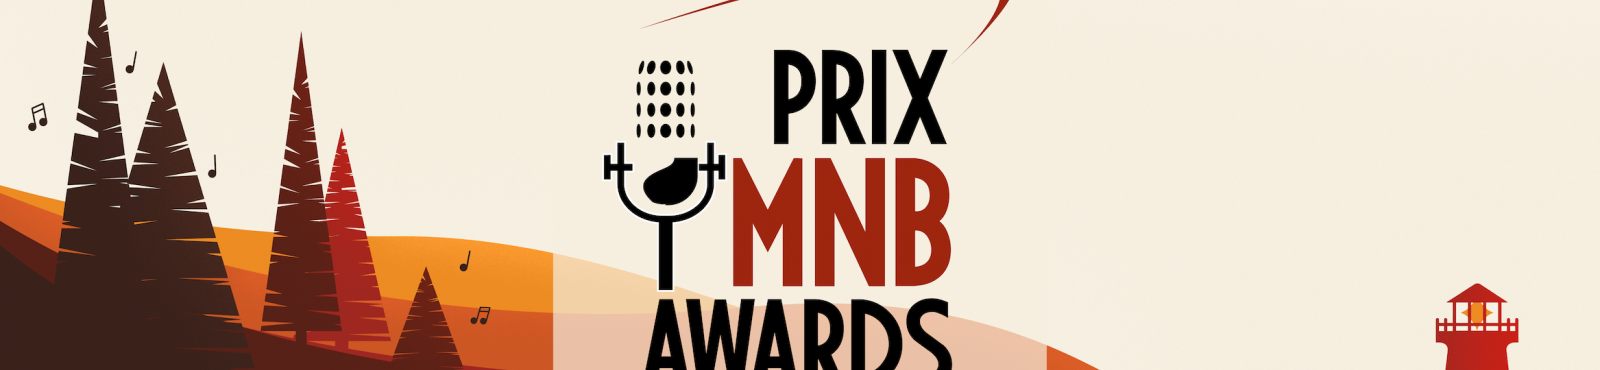 Prix MNB awards banner